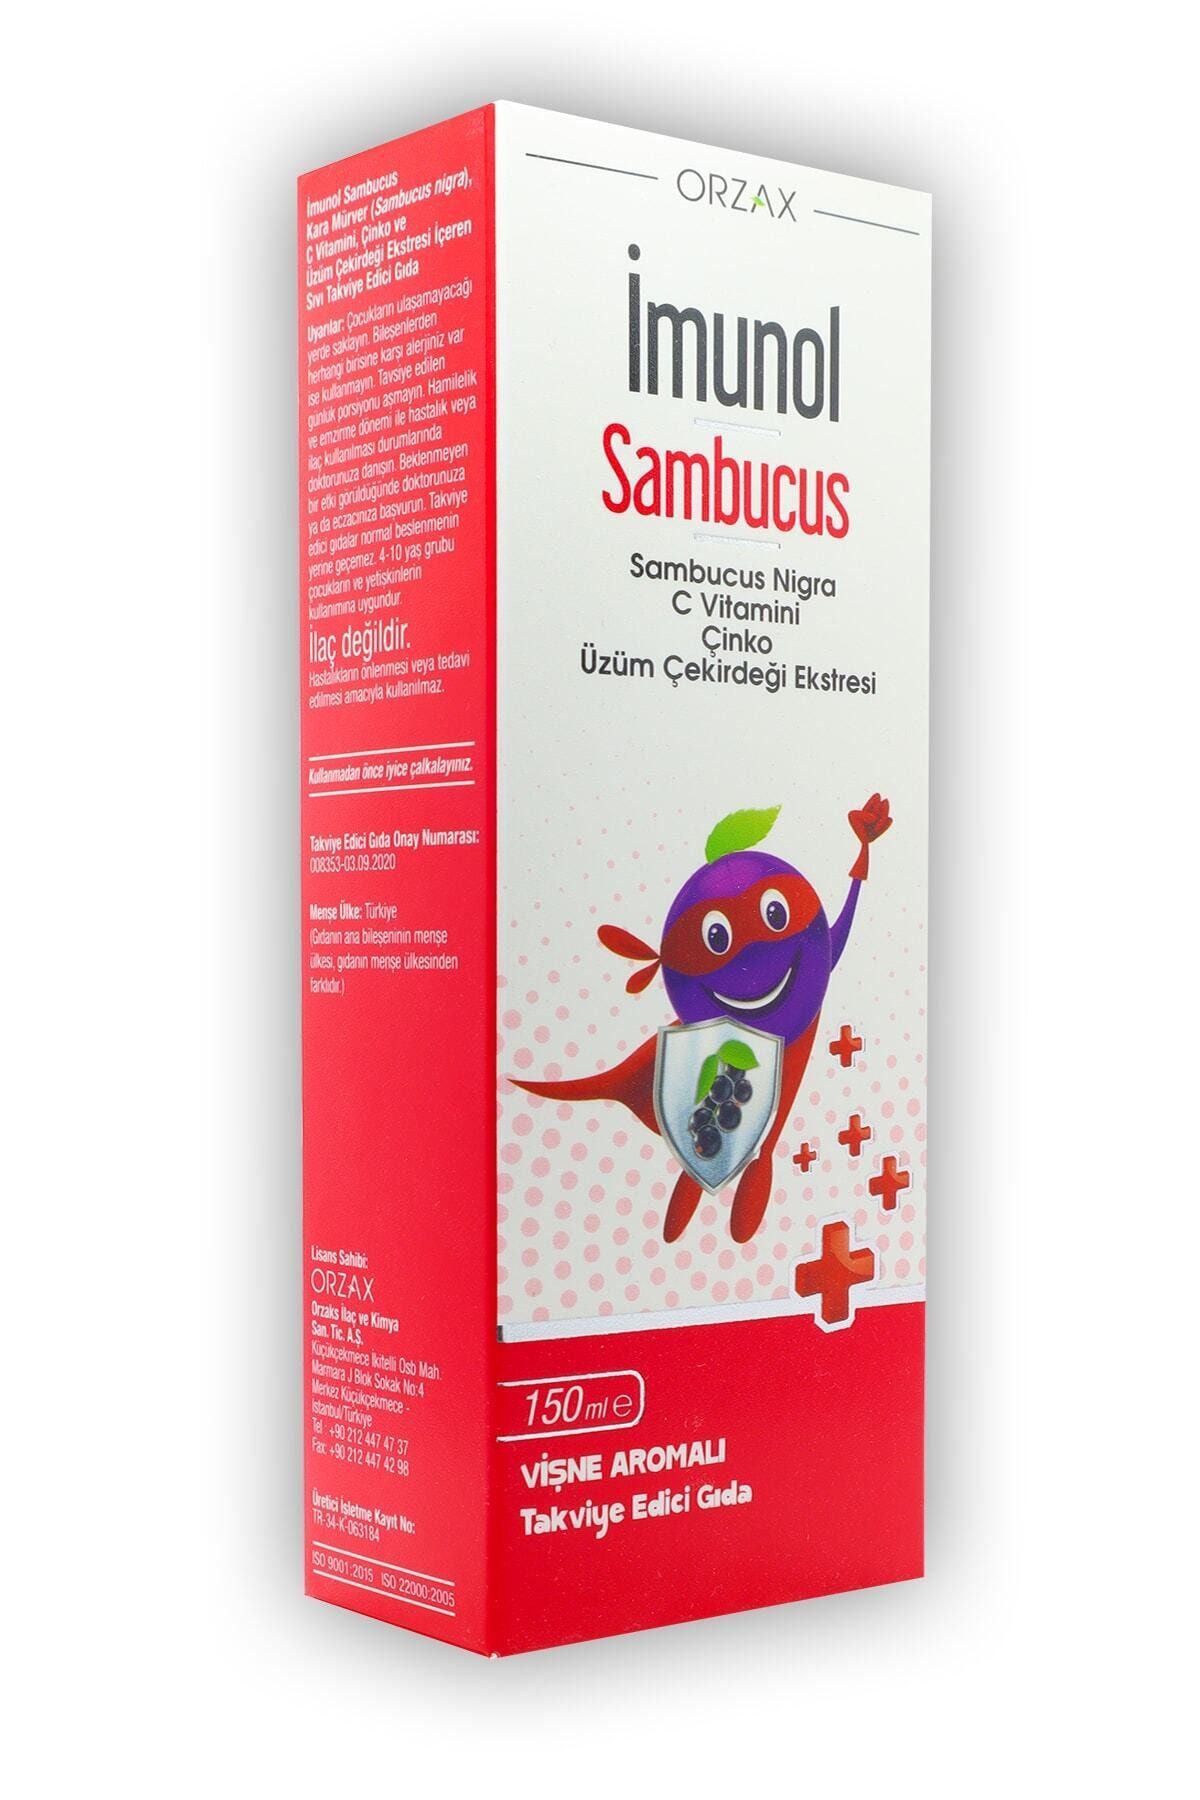 İMUNOL Imunol Sambucus 150ml Sıvı Form Vişne Aromalı